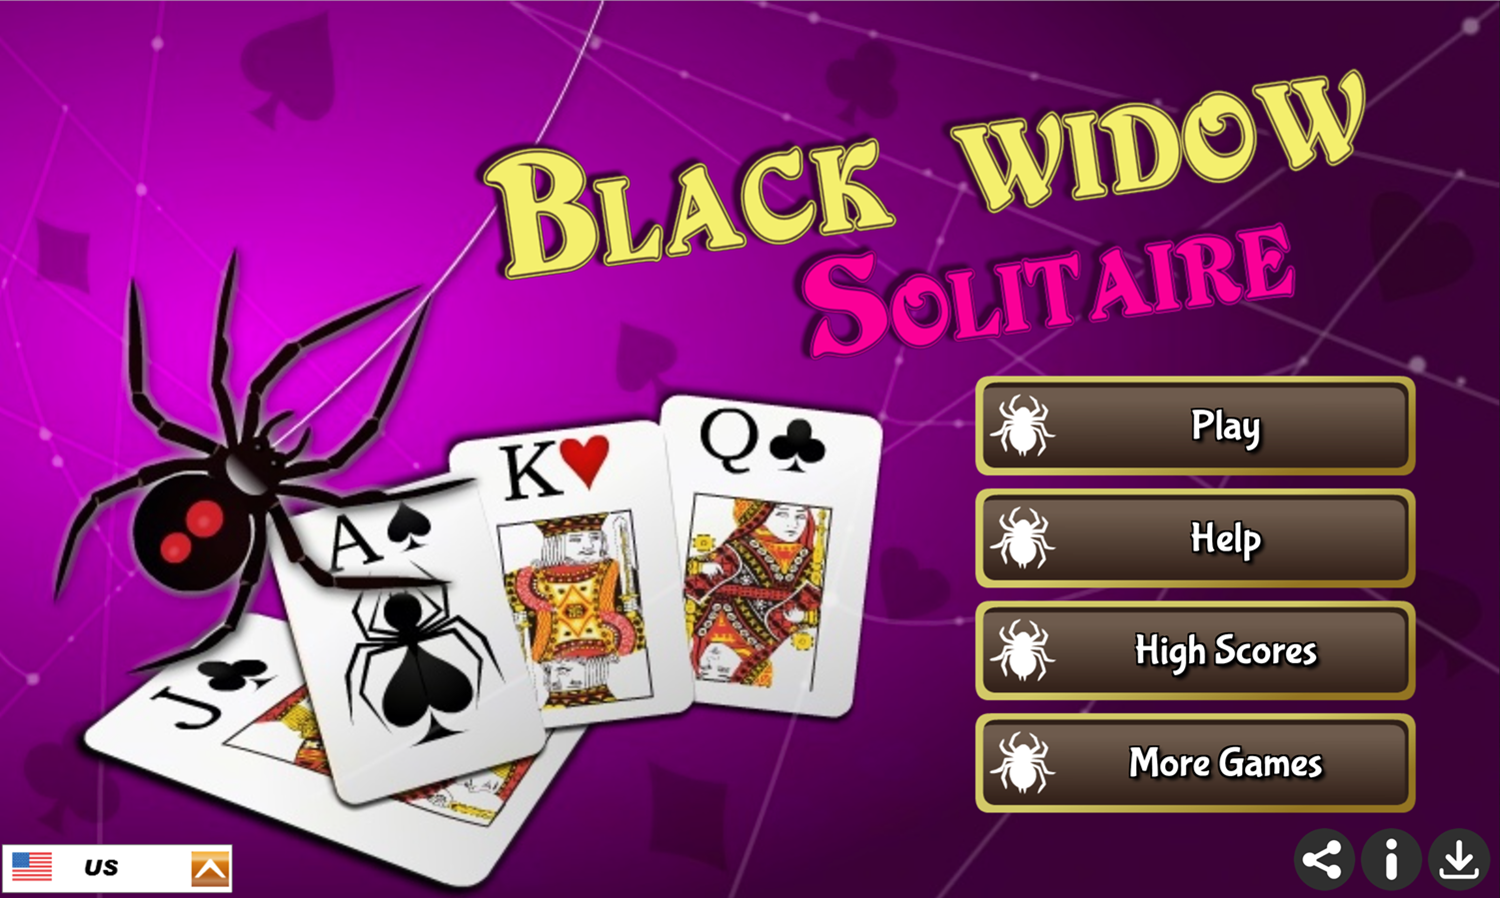 Black Widow Solitaire Game Welcome Screen Screenshot.